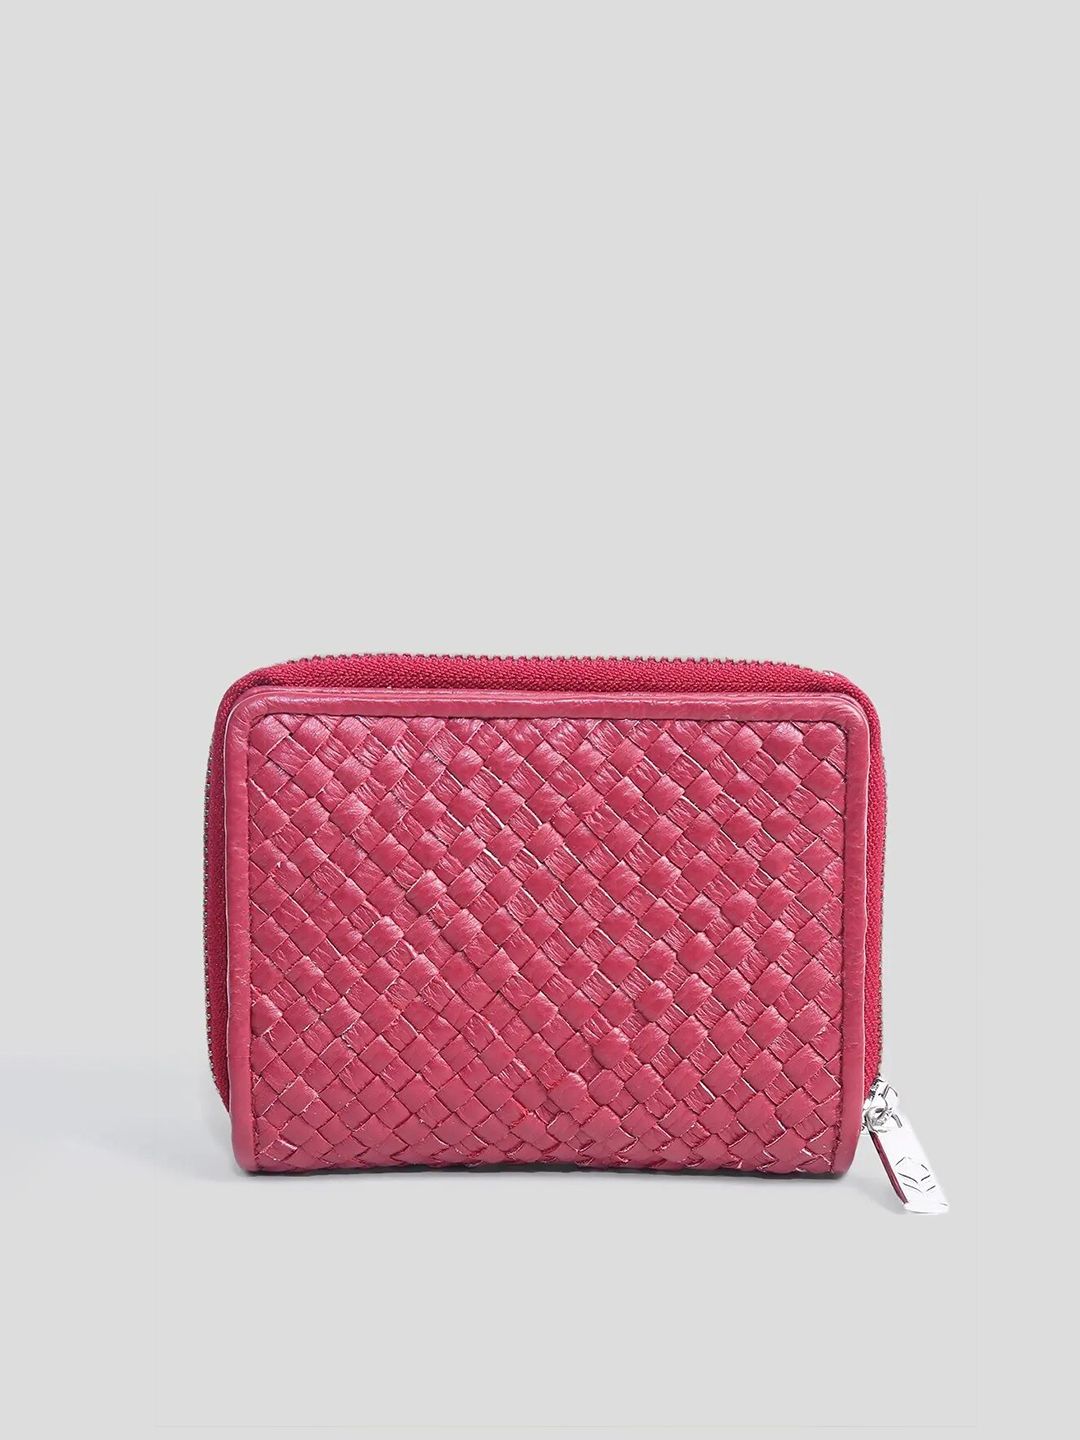 Biba Women Pink Textured Leather Zip Around Wallet Price in India